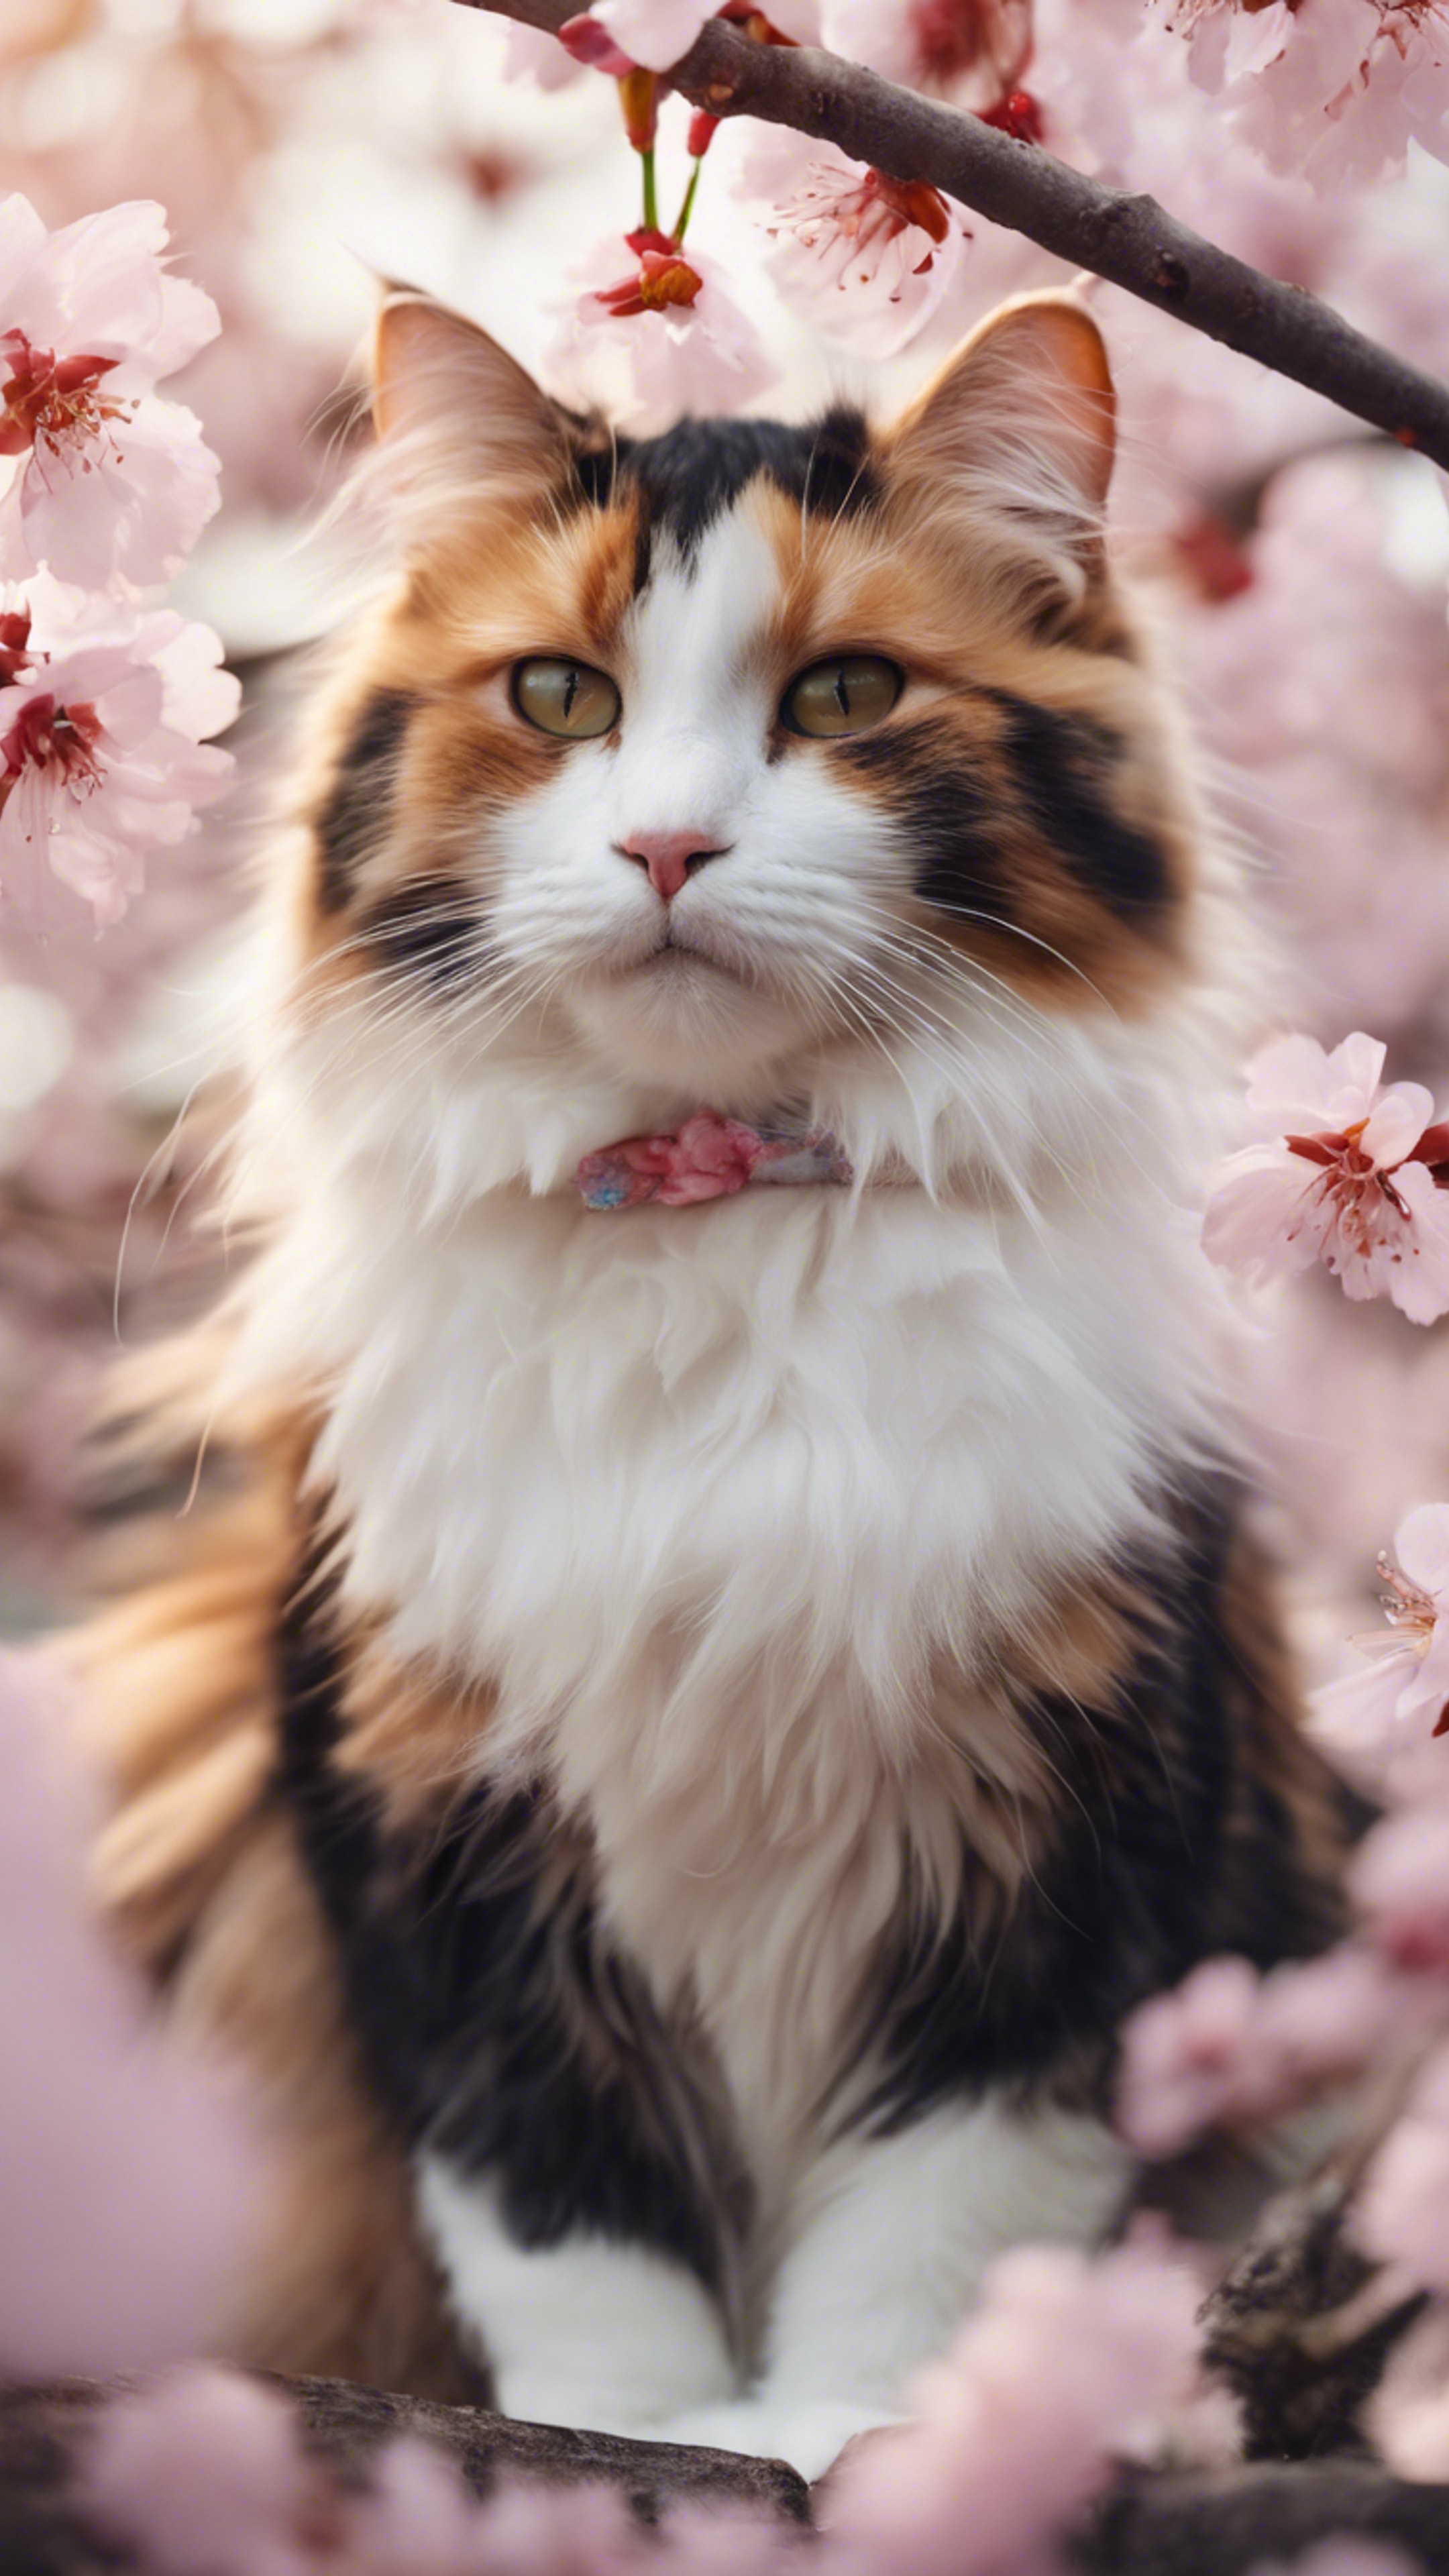 A fluffy calico cat in a cute pose sitting amongst cherry blossoms. Tapeta na zeď[3cf3847c7c9c4f38aba7]